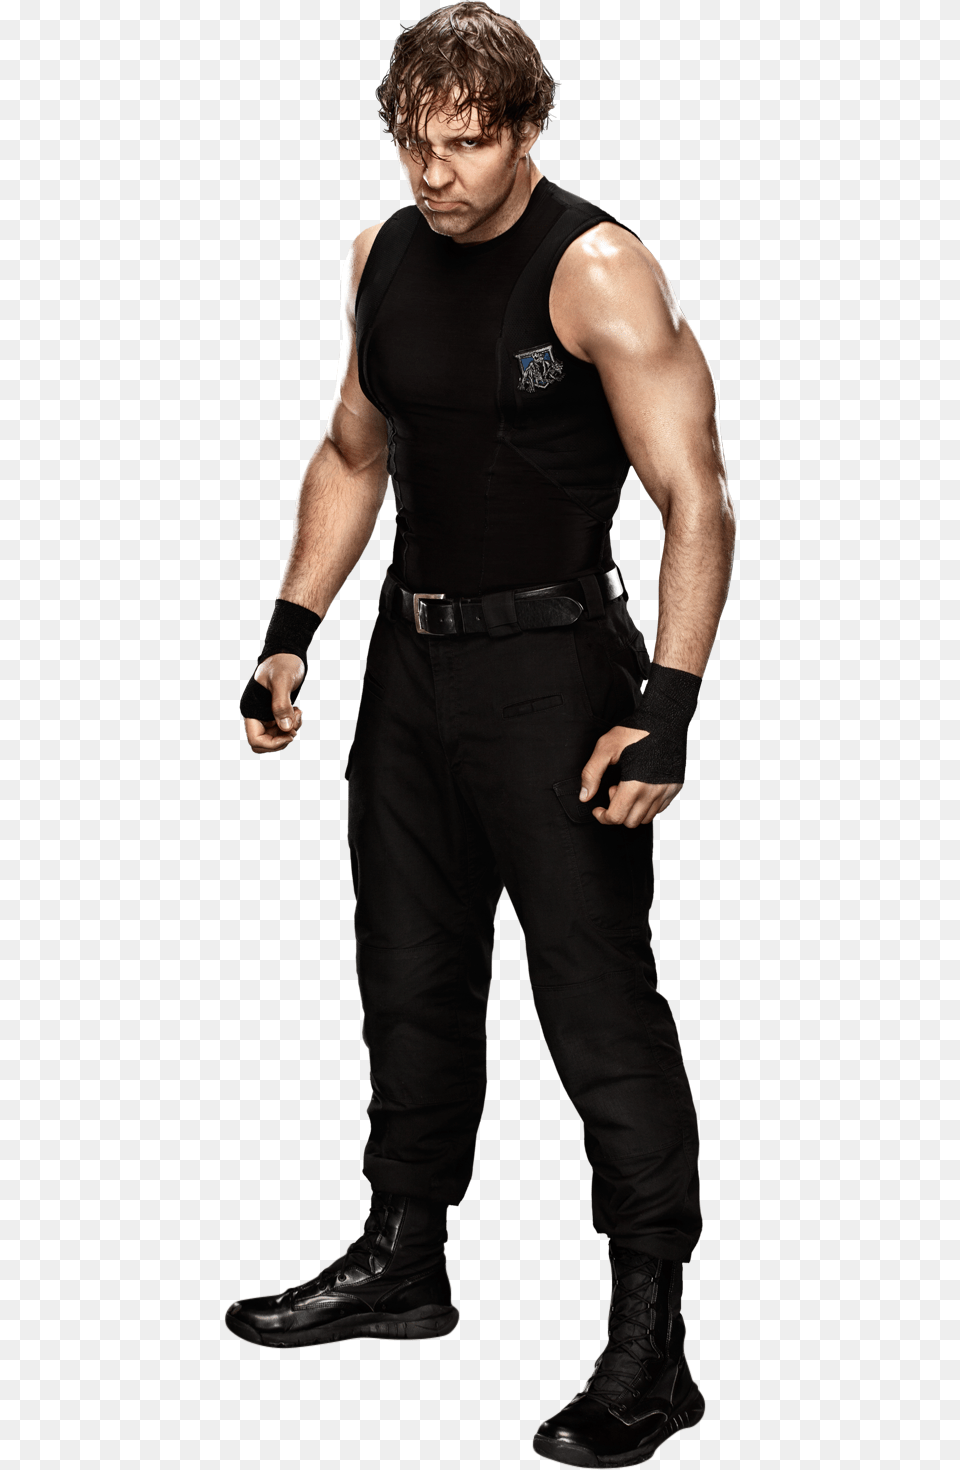 Daniel Bryan Dean Ambrose Shield Attire, Clothing, Adult, Male, Person Png Image